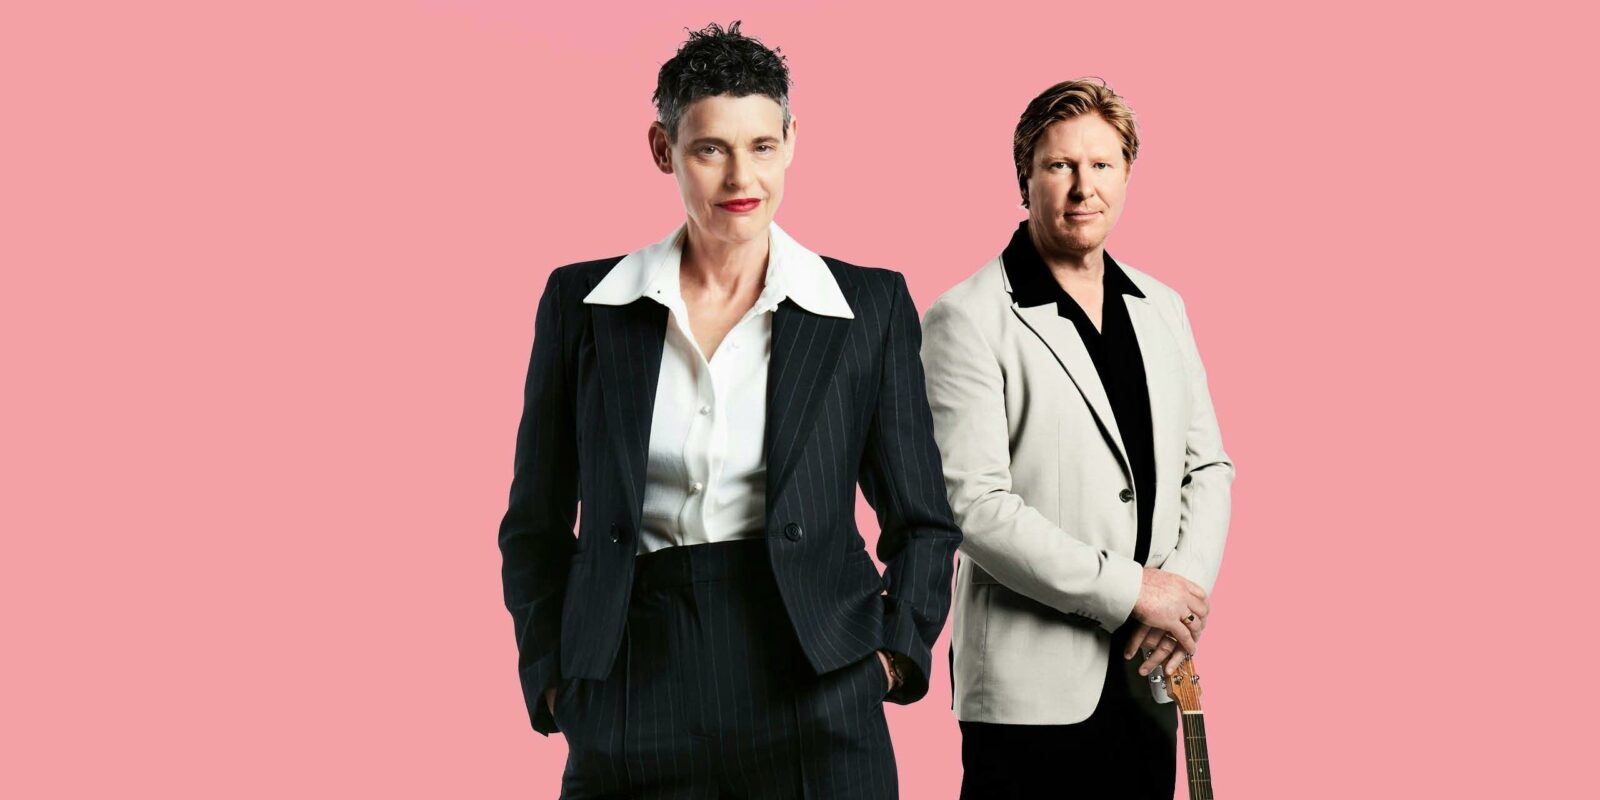 Deborah Conway and Darren Coggan standing in front of a pink background